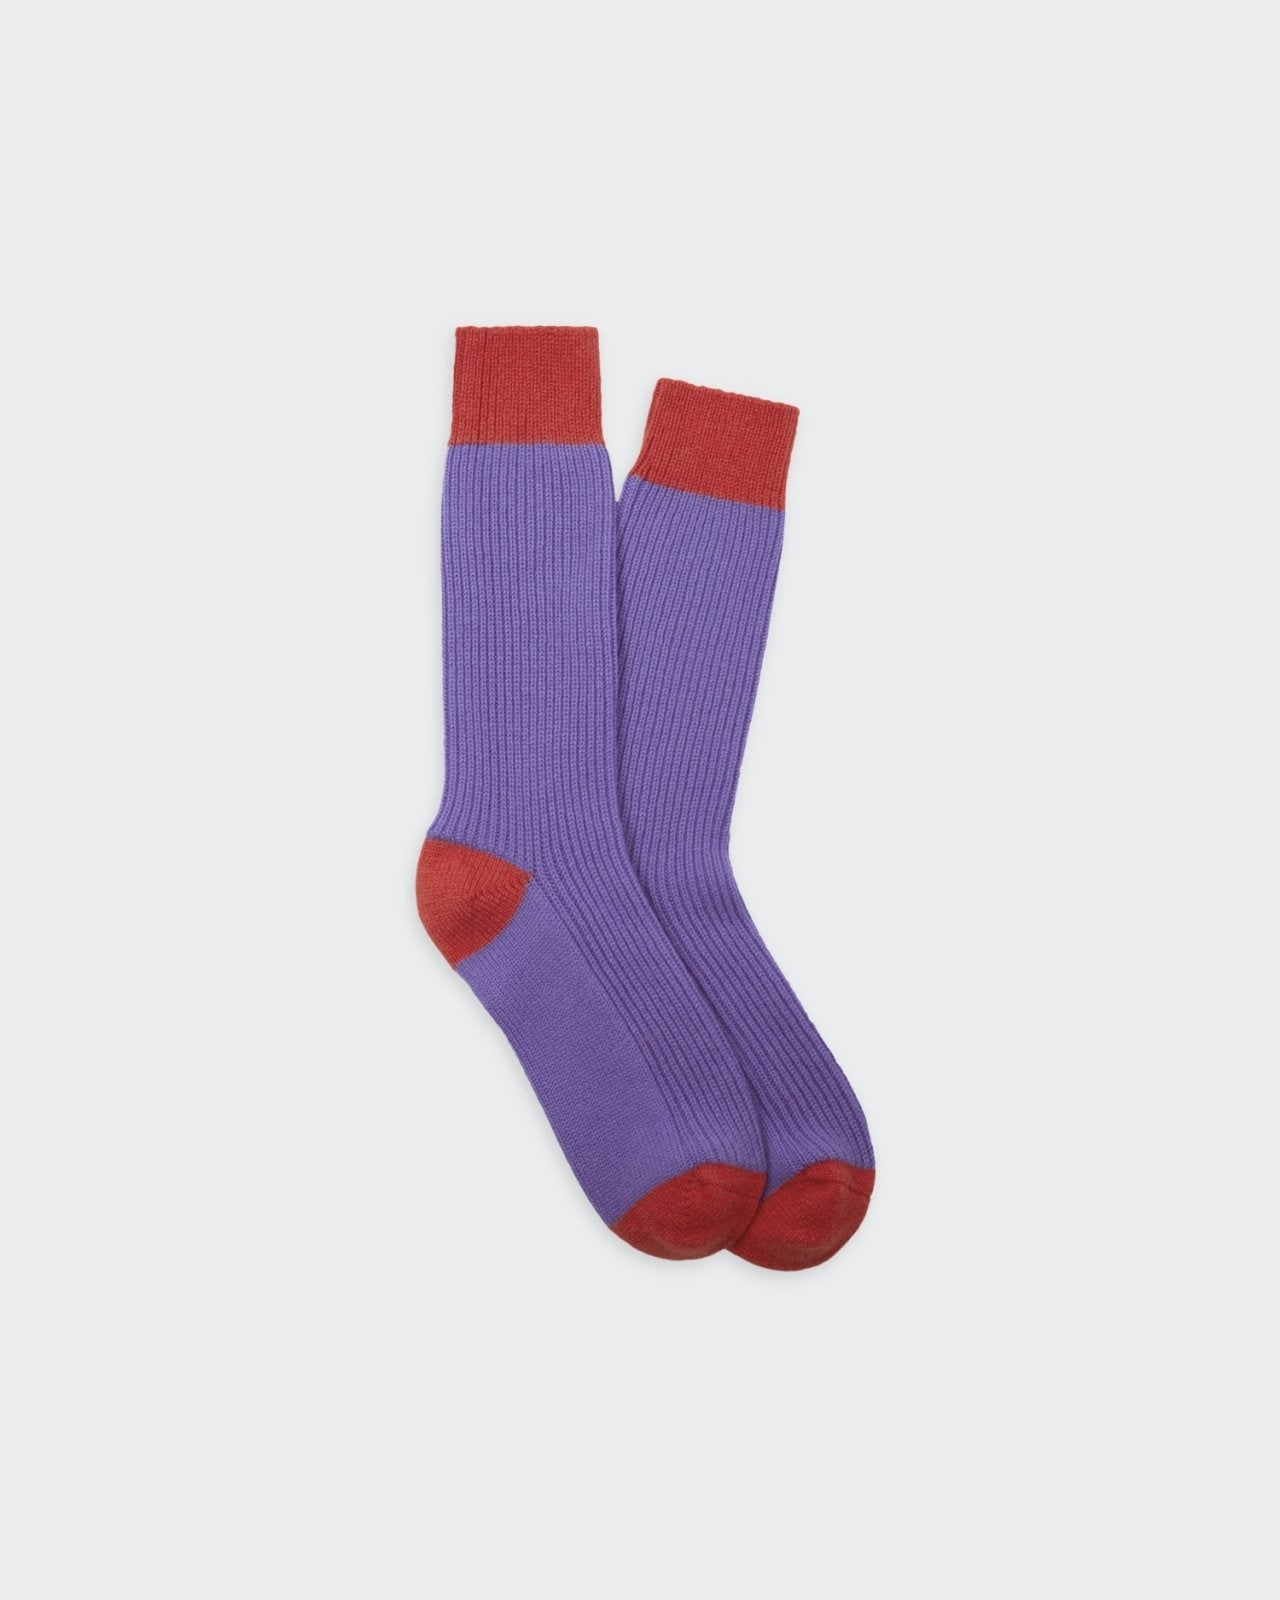 The Soft Socks - Purple Haze/Cherry